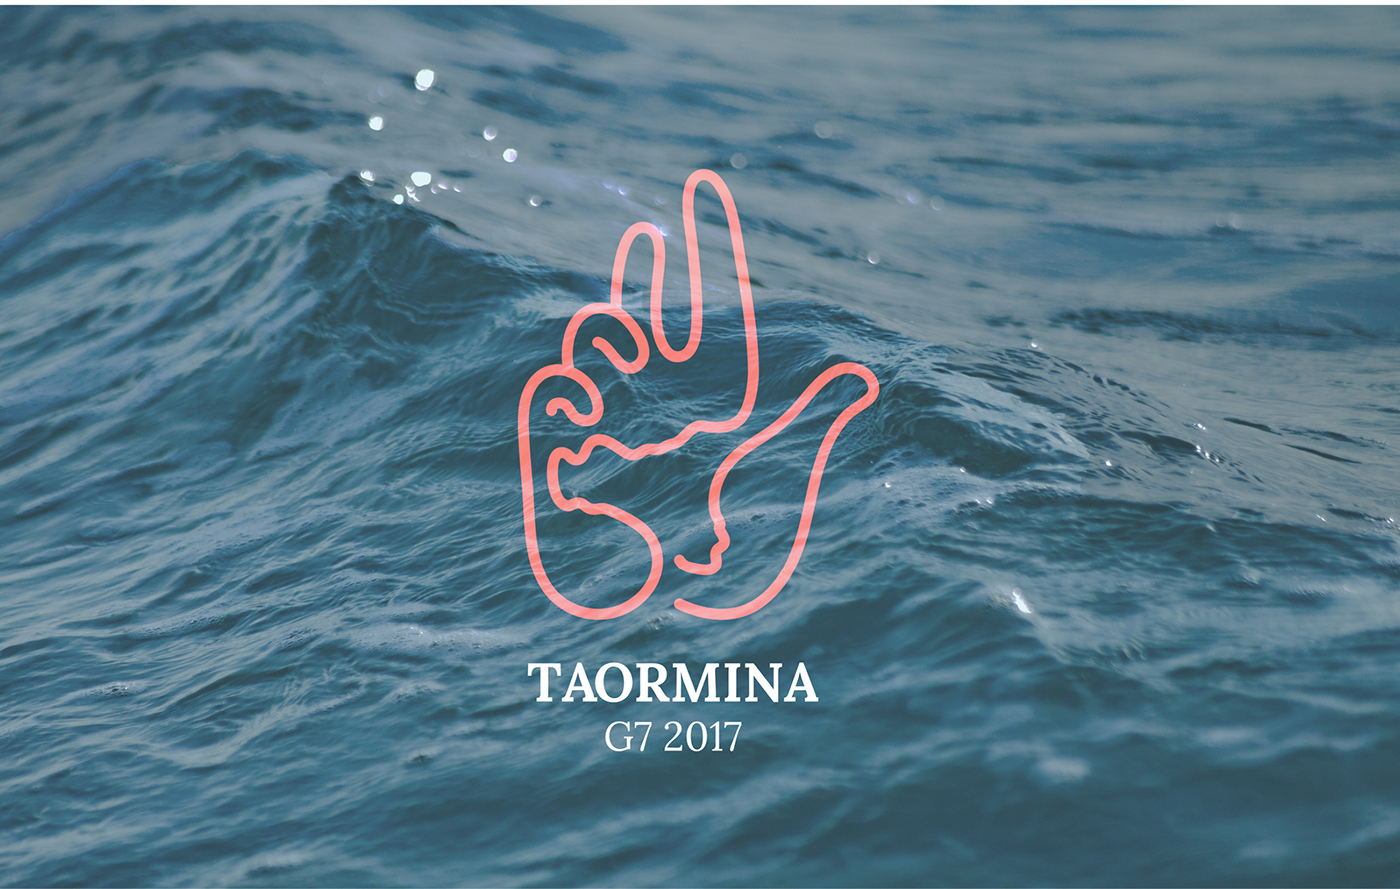 g7 sicily Taormina culture Immigration politic sea multiculture Italy logo